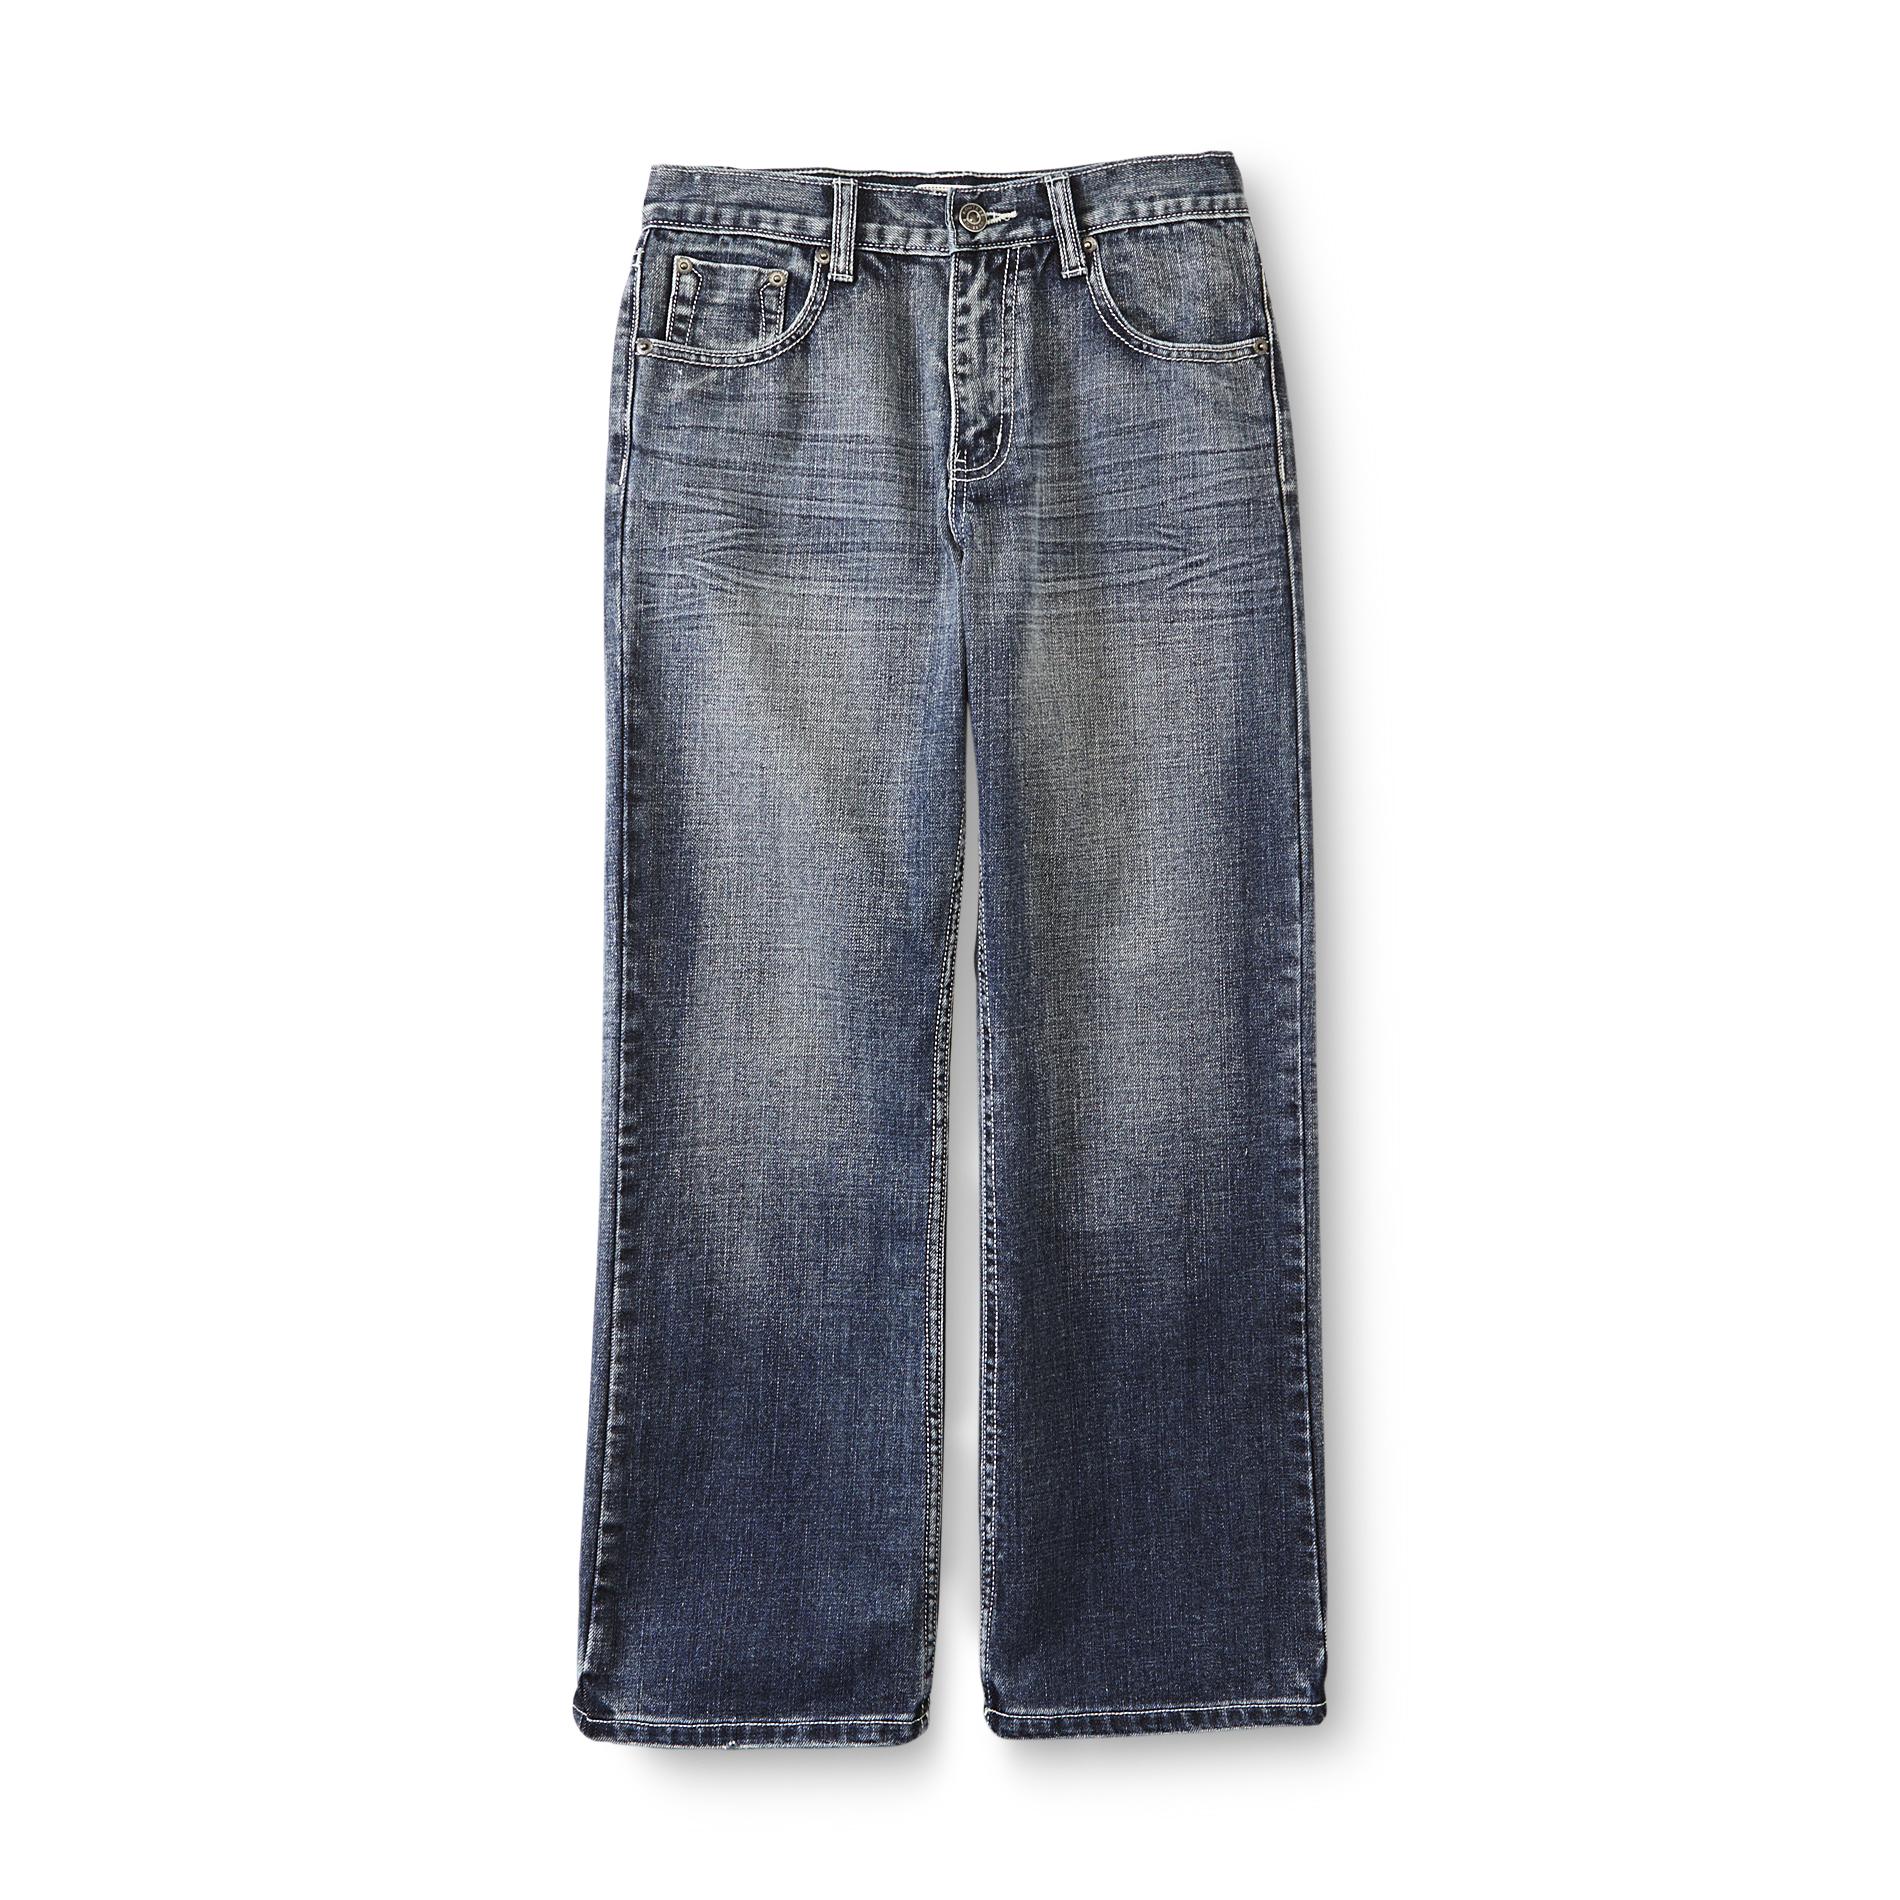 Route 66 Boy's Bootcut Jeans - Medium Wash